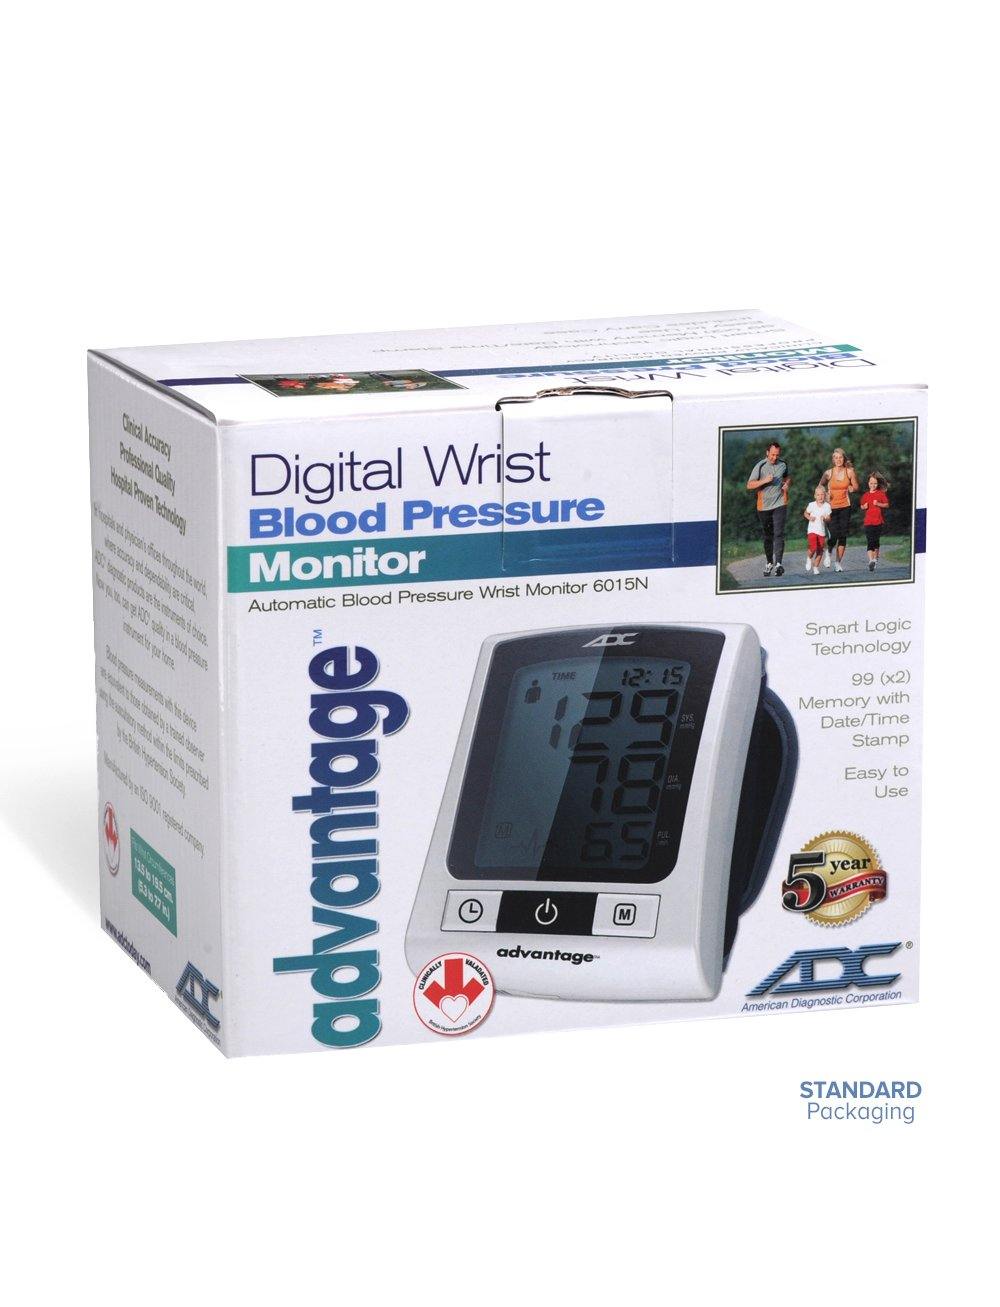 Digital Automatic Blood Pressure Monitor